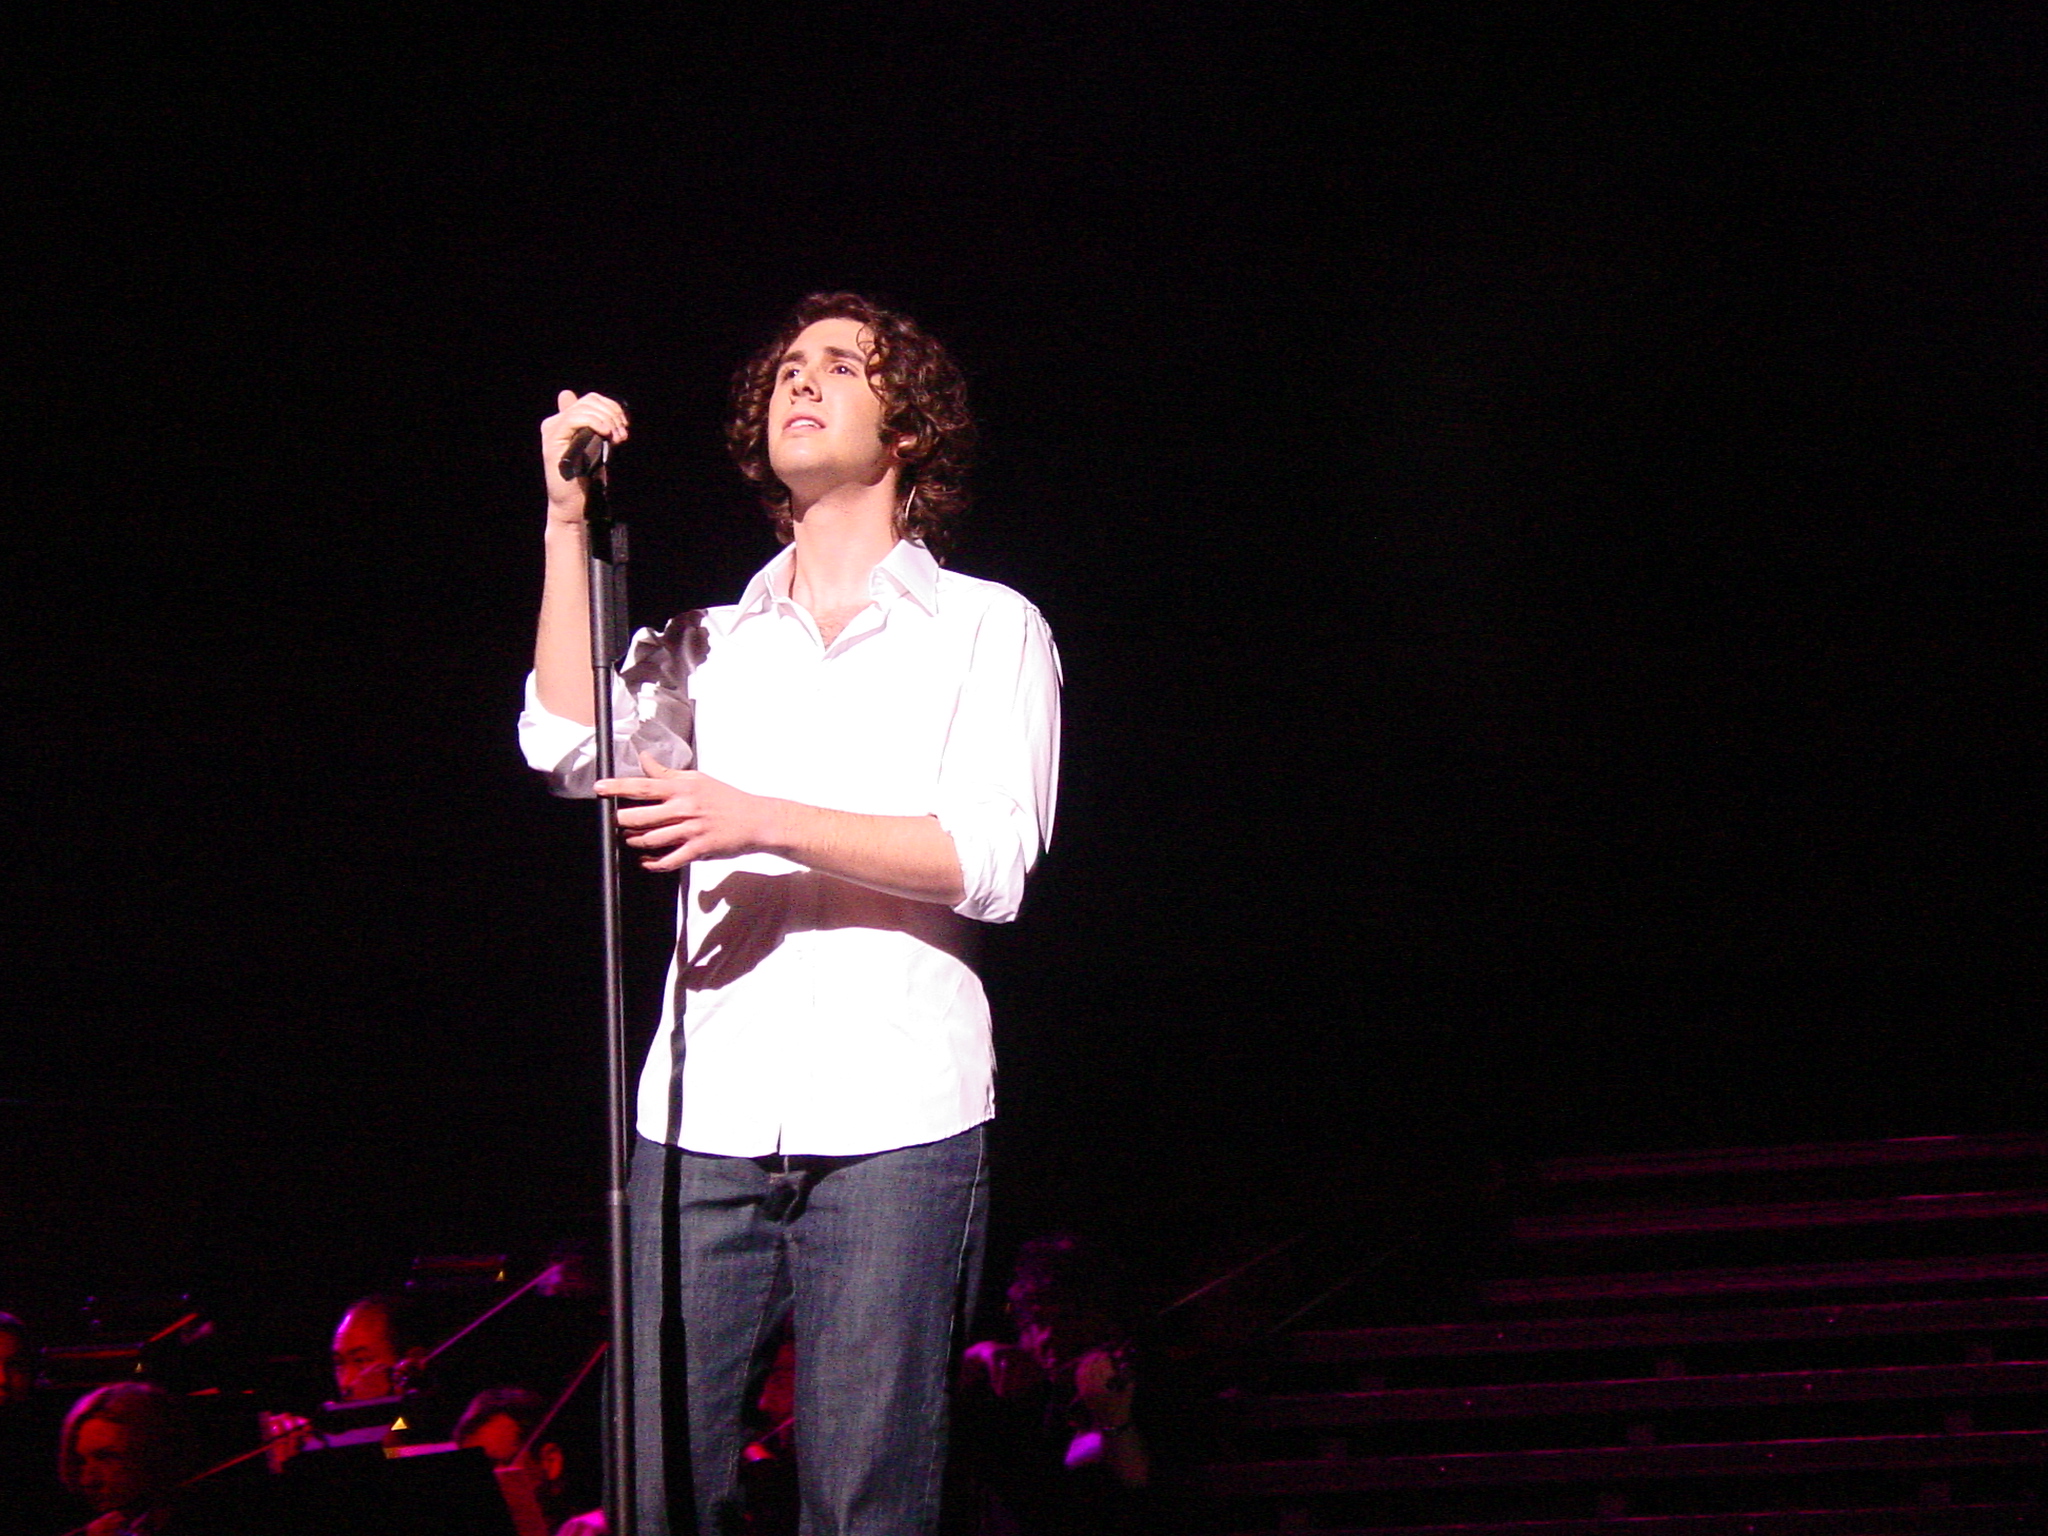 Josh in 2004 